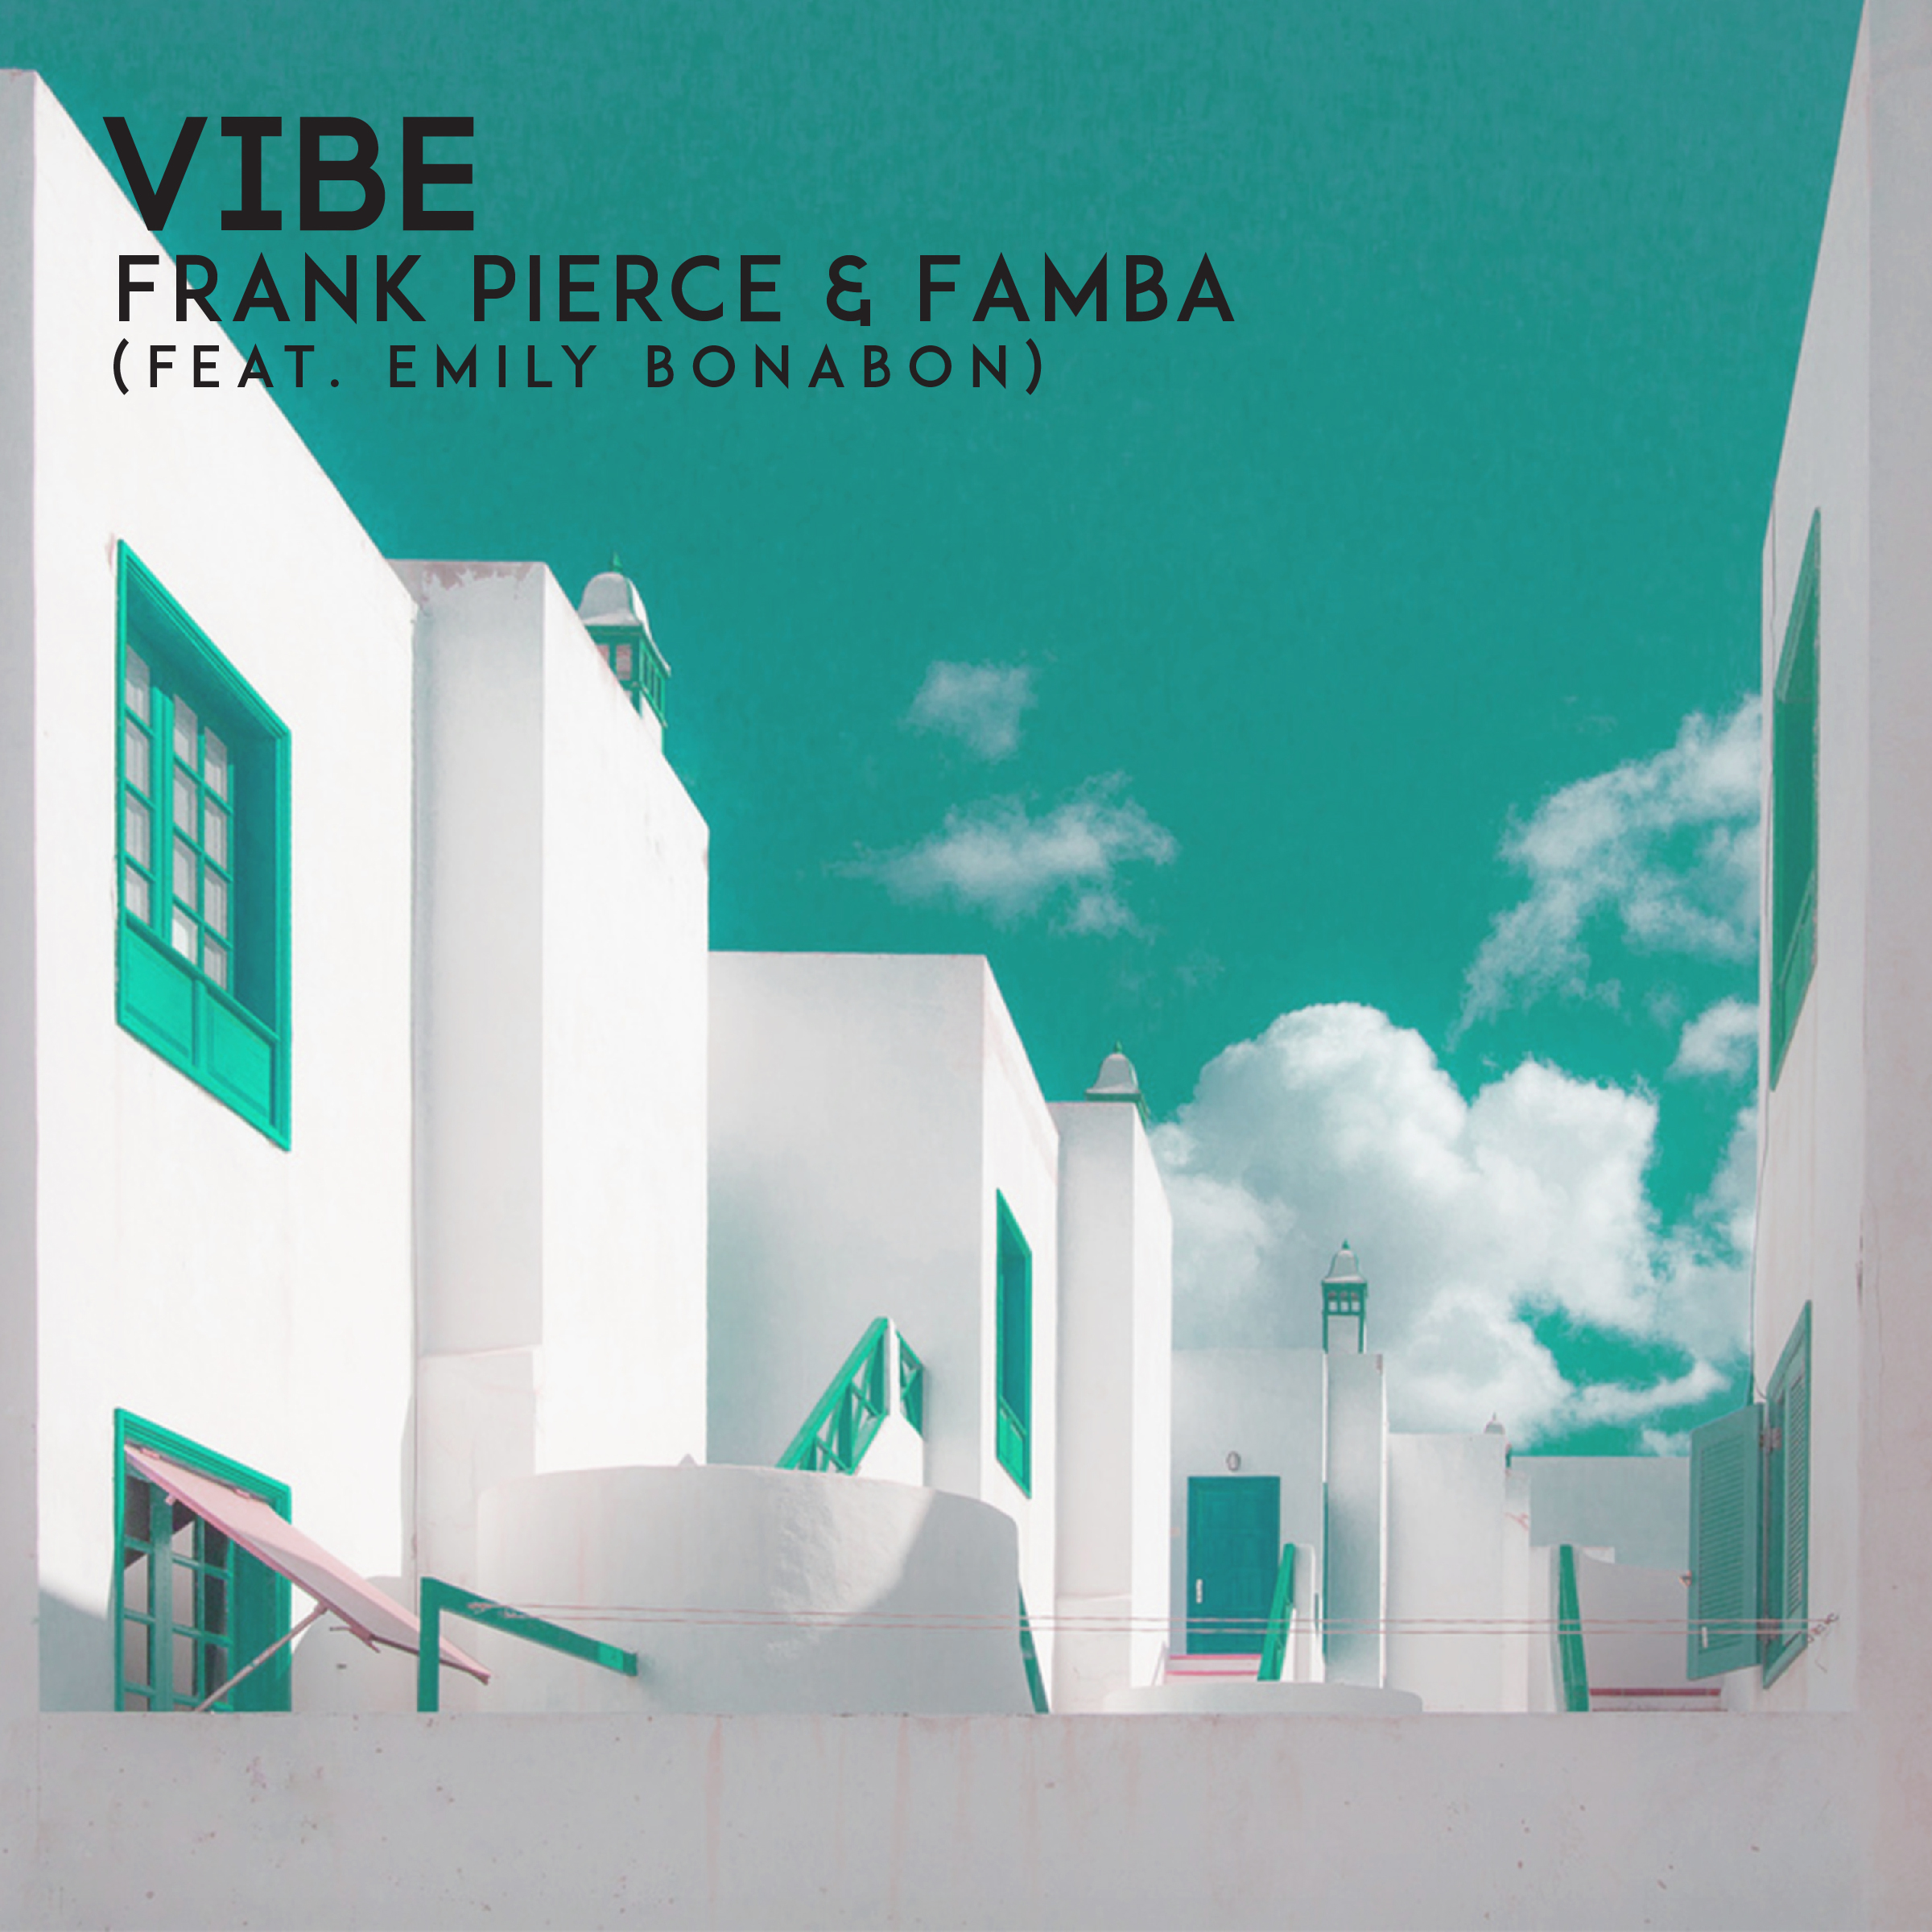 Frank Pierce & Famba Create Something You Can “Vibe” To